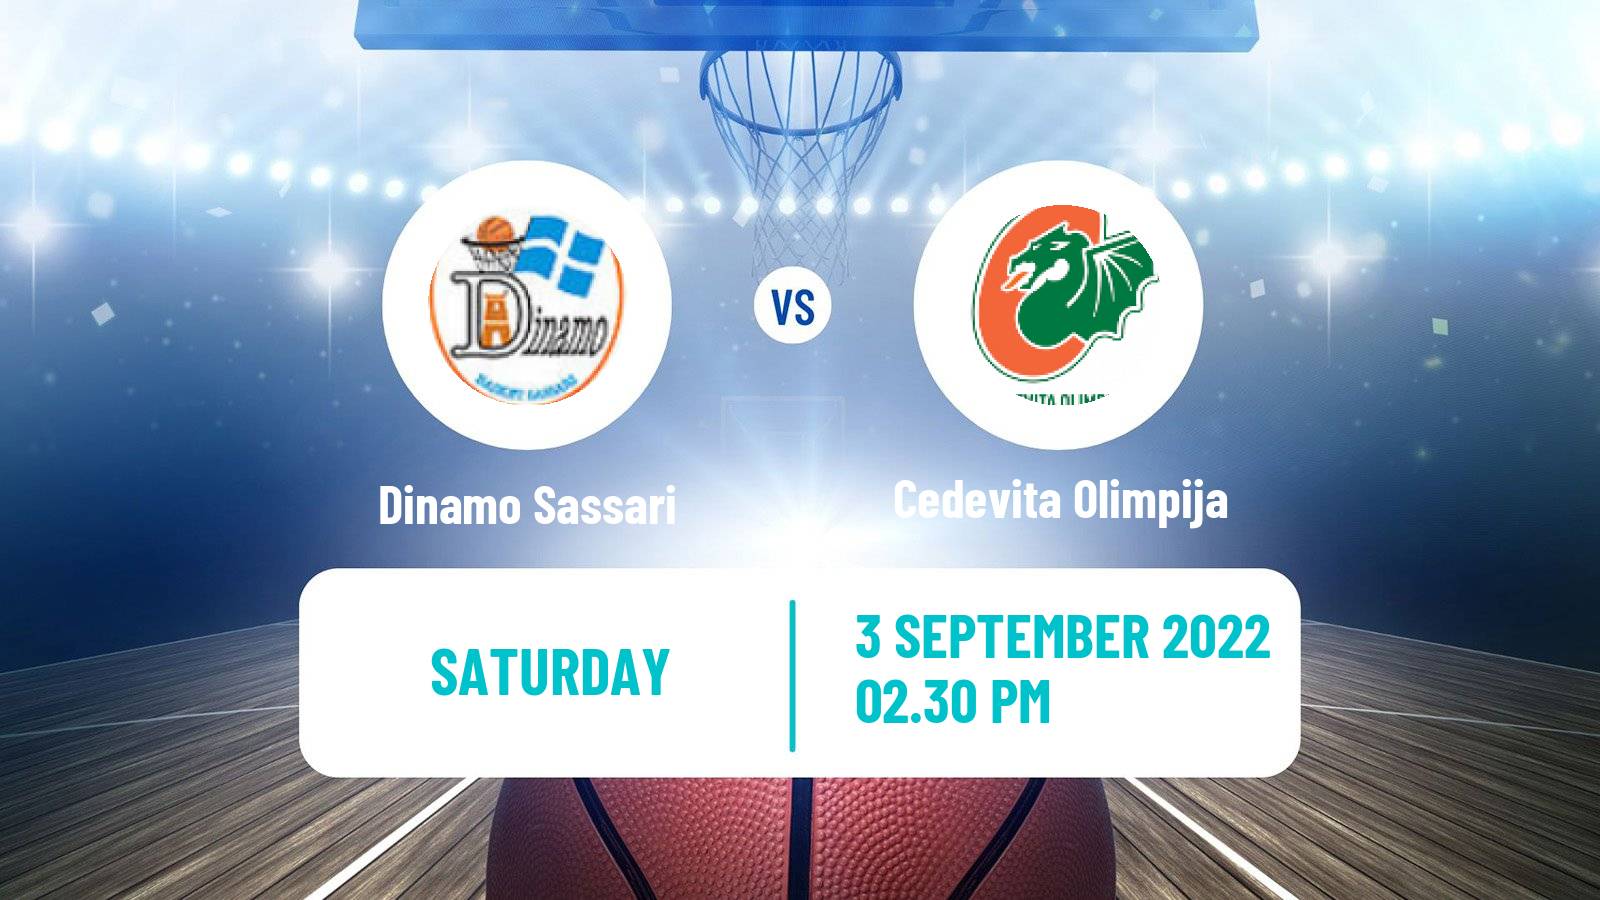 Basketball Club Friendly Basketball Dinamo Sassari - Cedevita Olimpija